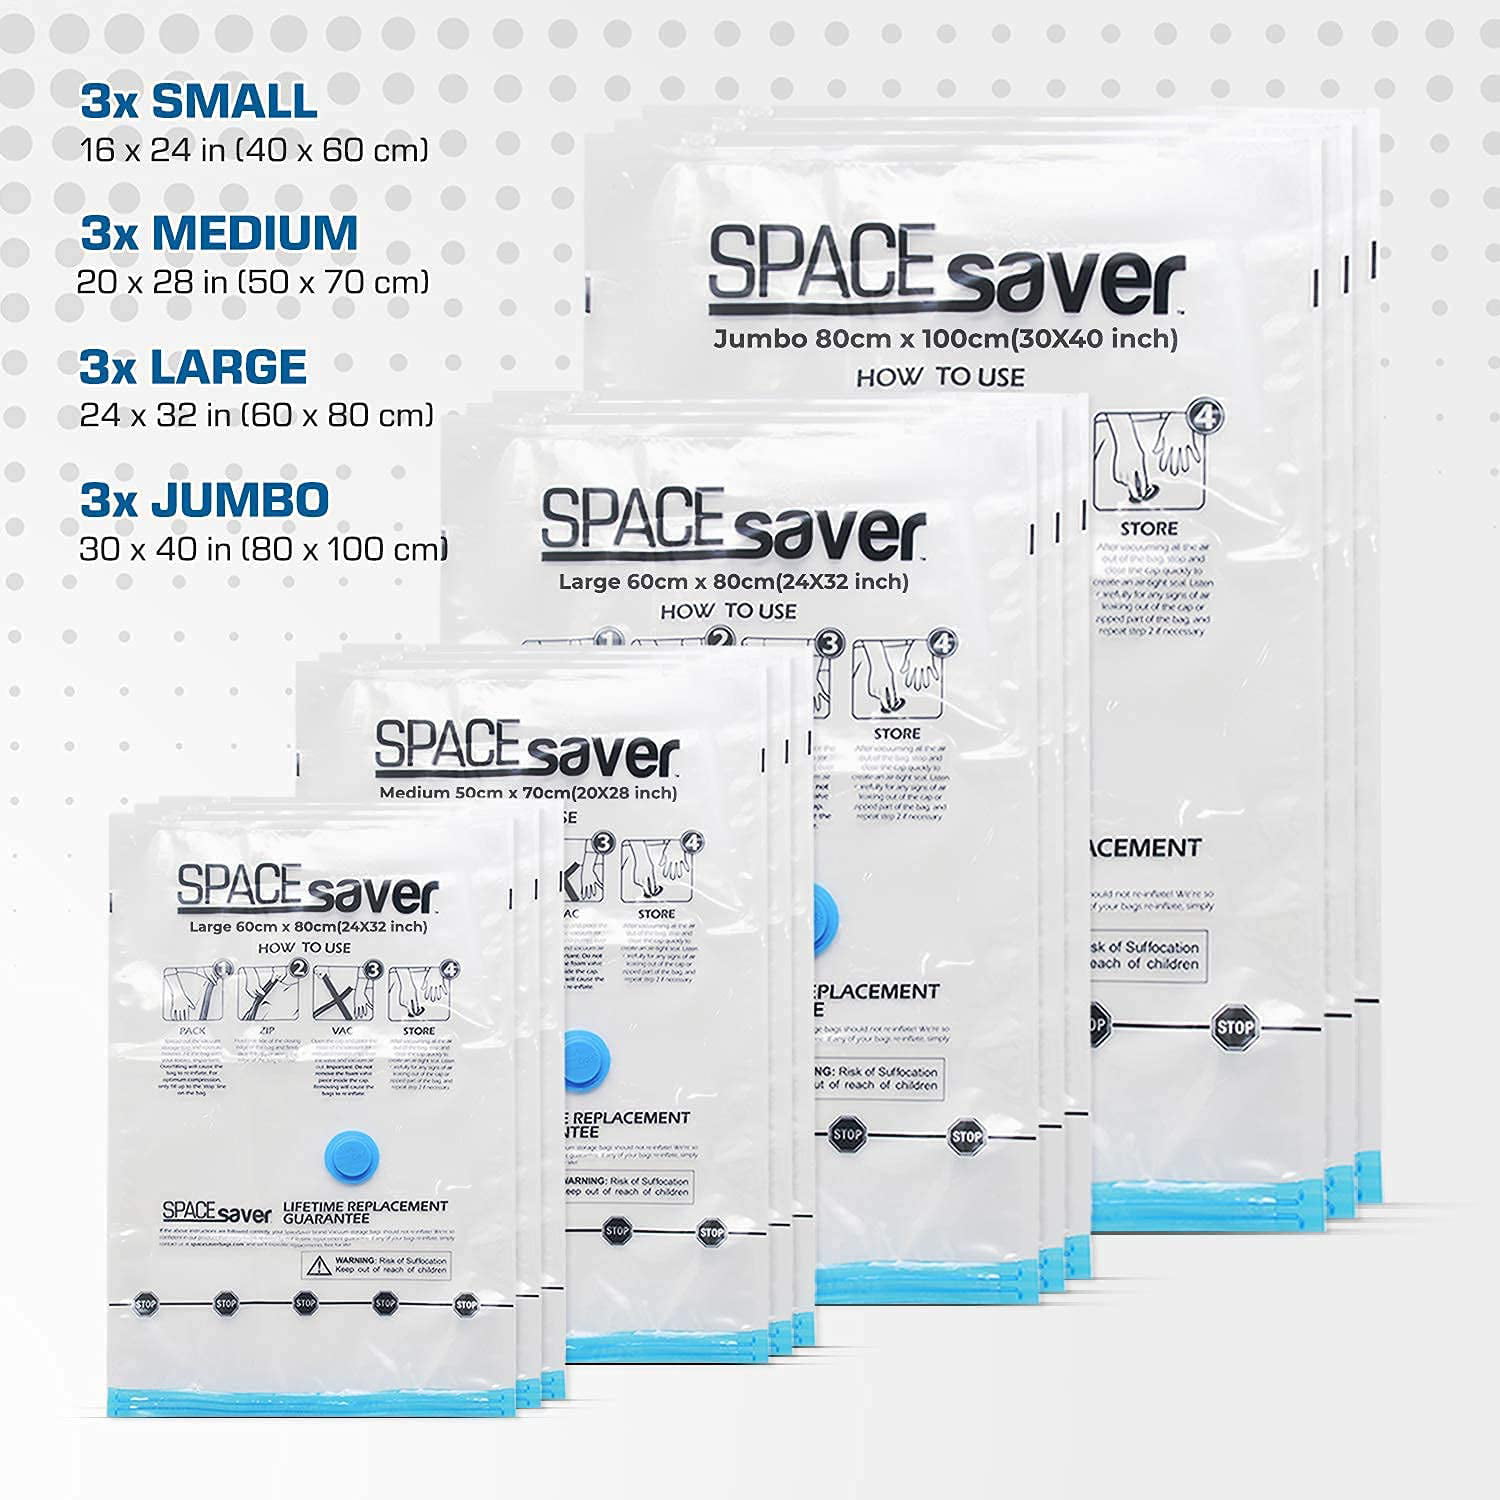 Spacesaver Premium Space Saver Vacuum Storage Bags, Jumbo Size, 2-Pack